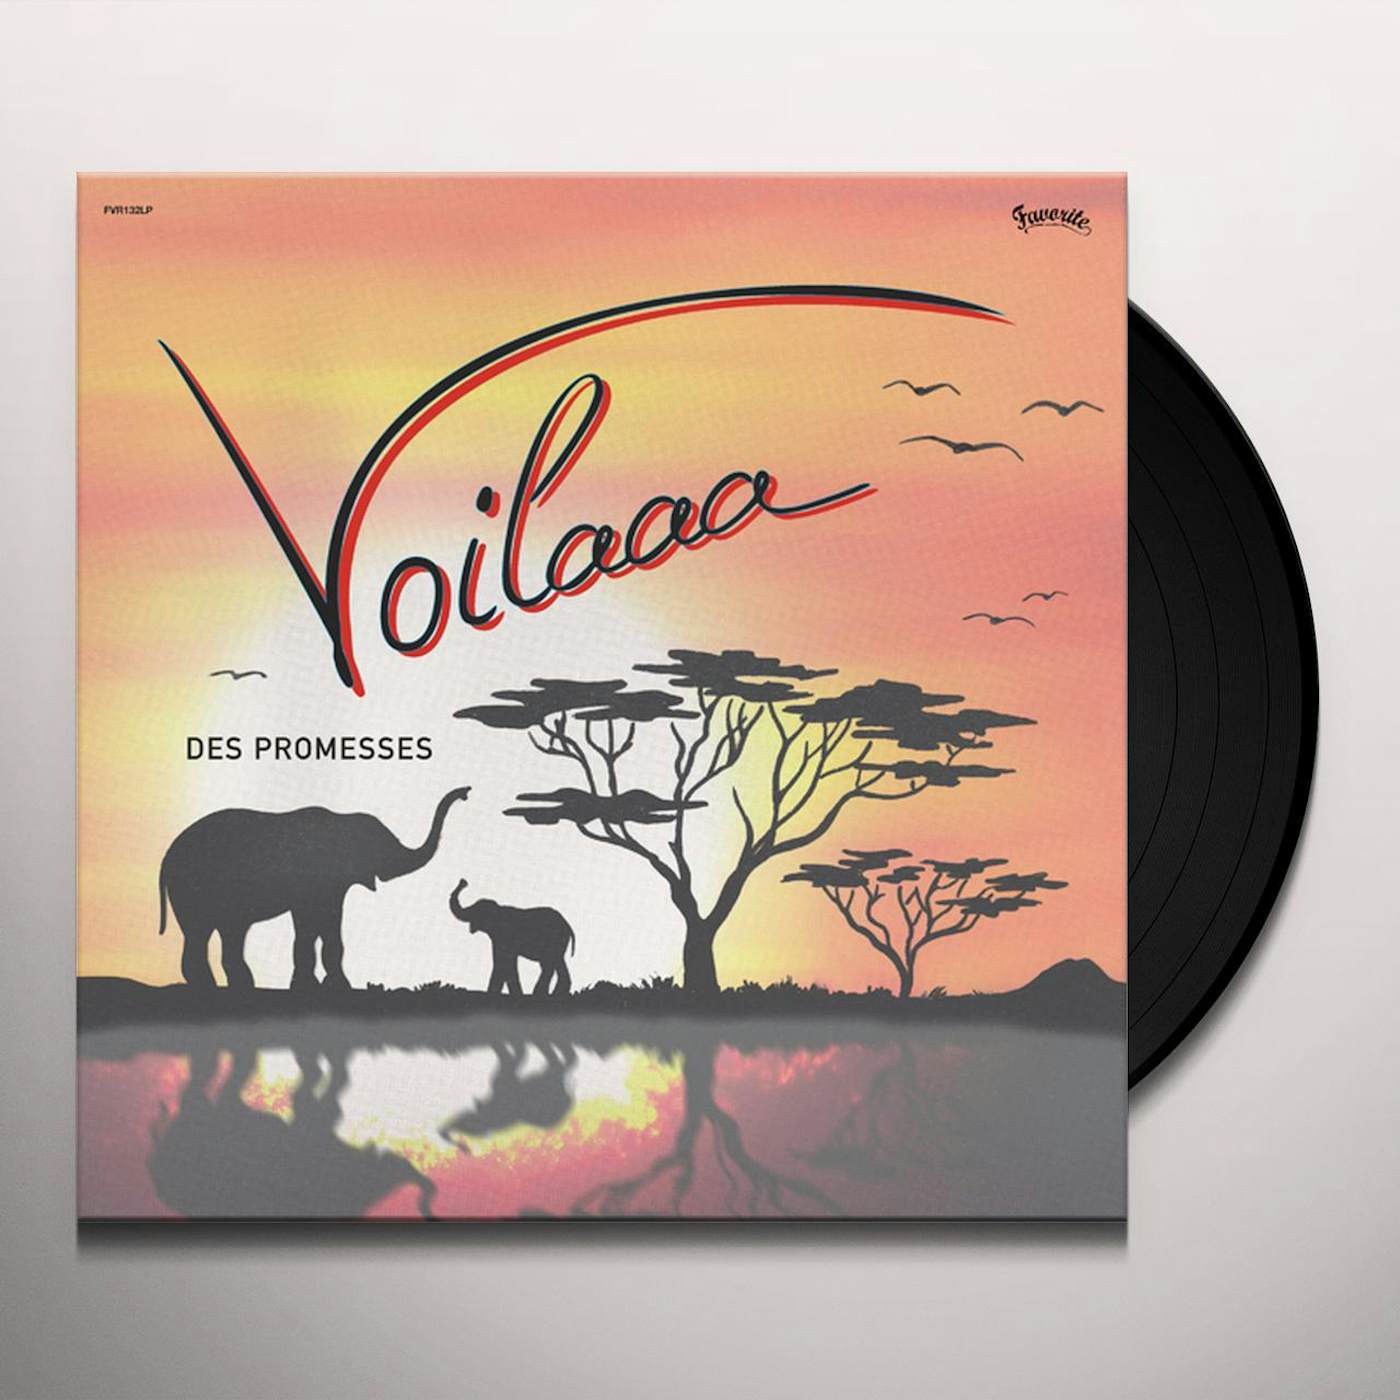 Voilaaa Des promesses Vinyl Record